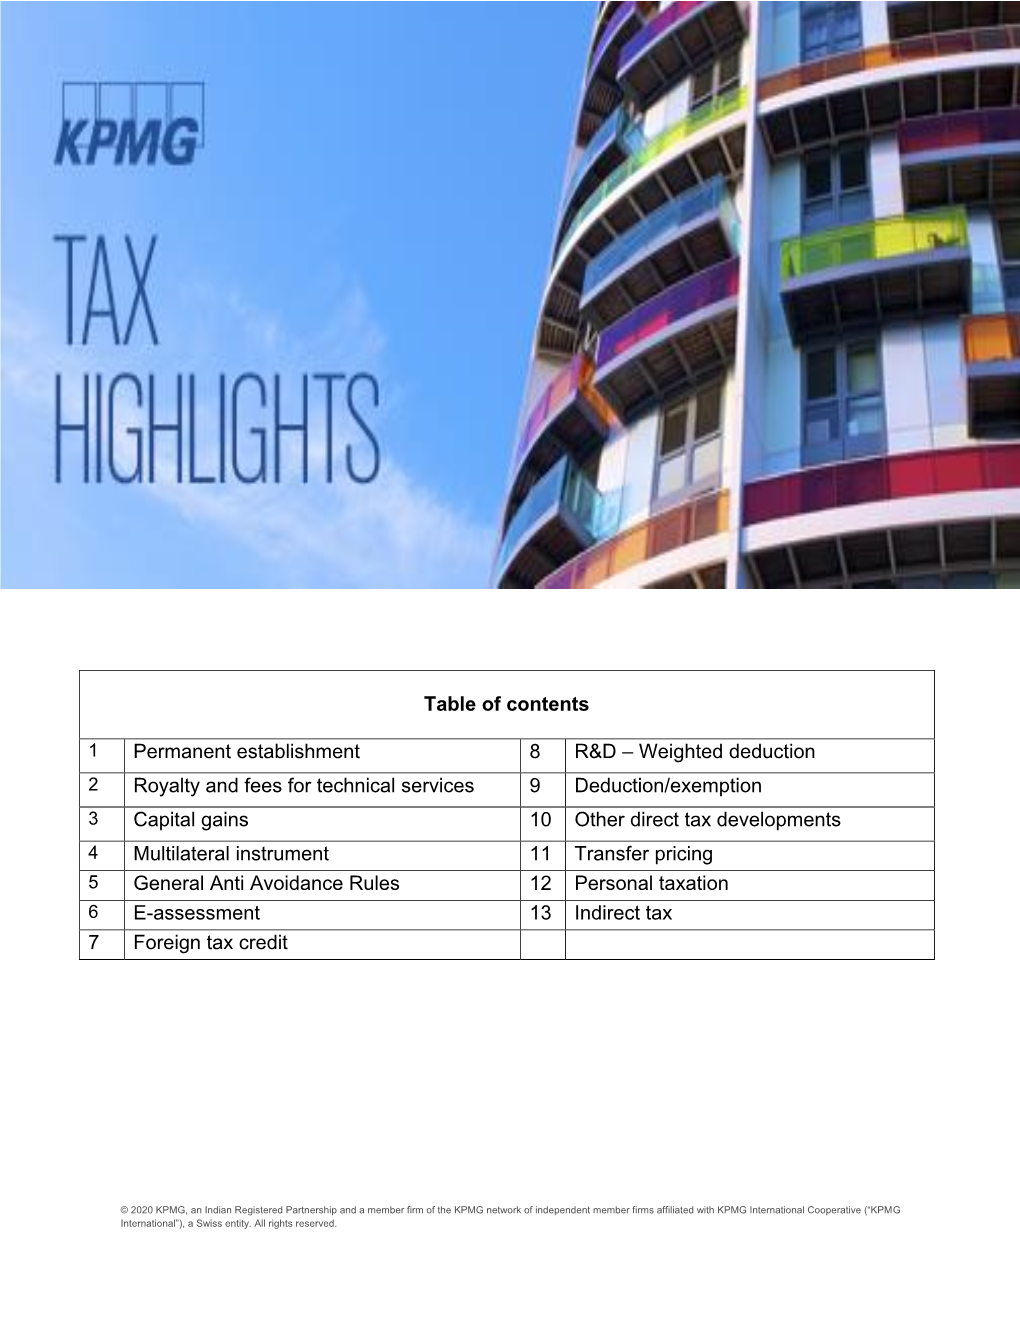 KPMG Tax Highlights